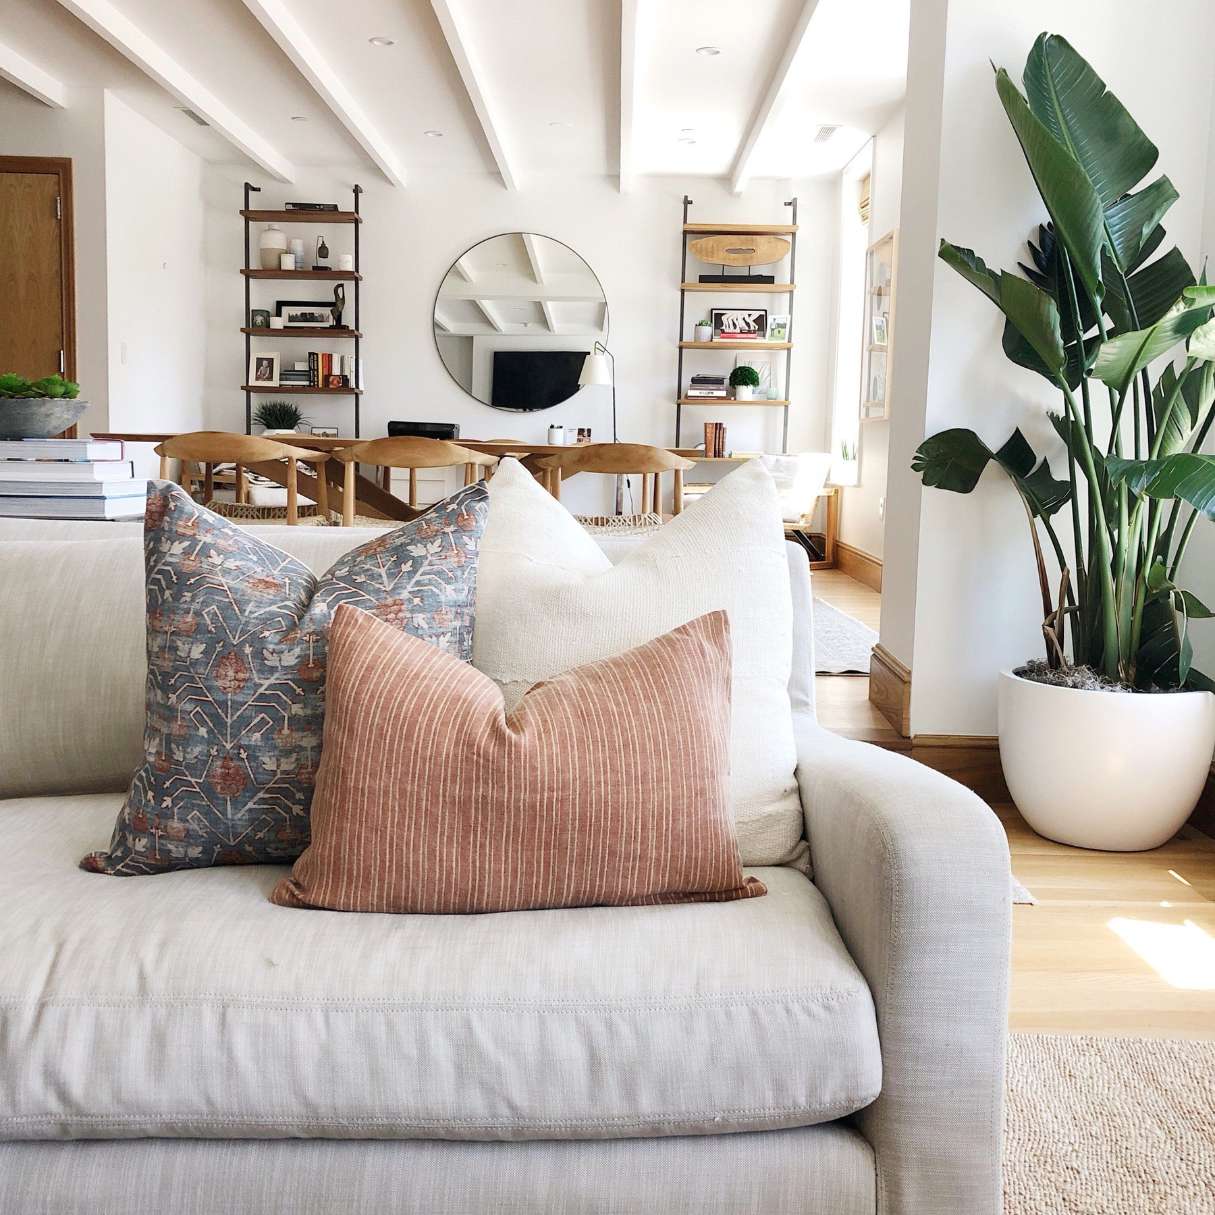 How To Make Decorative Sofa Pillows